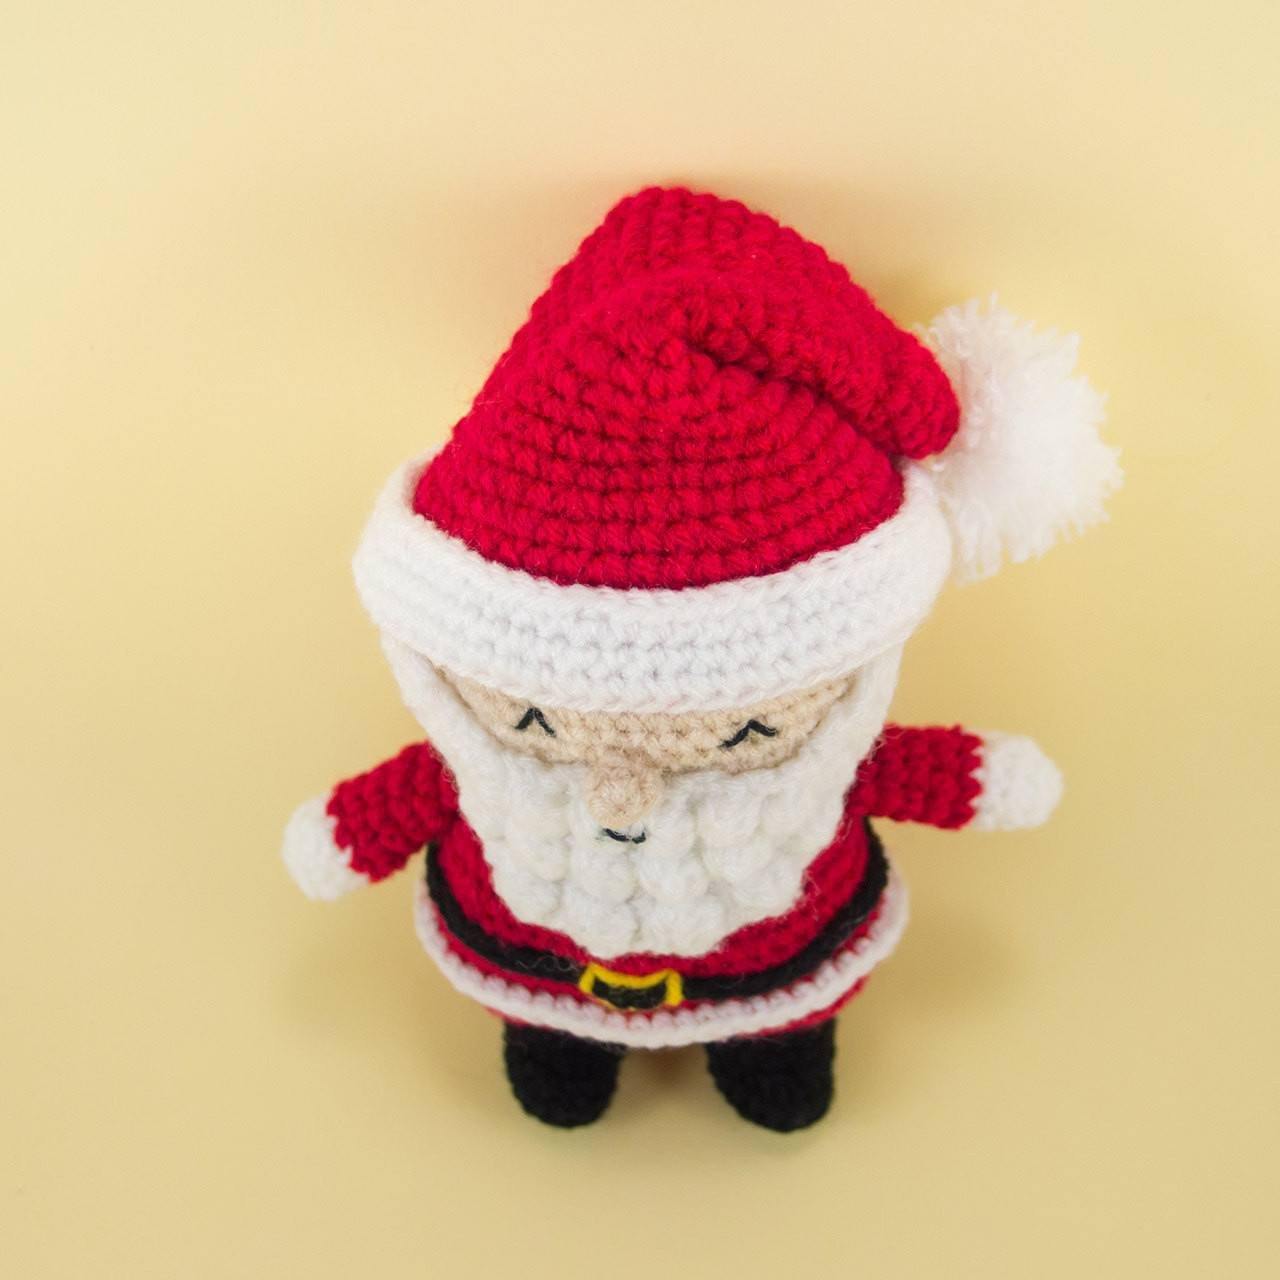 Crochet Santa Ornament for Holiday Decor